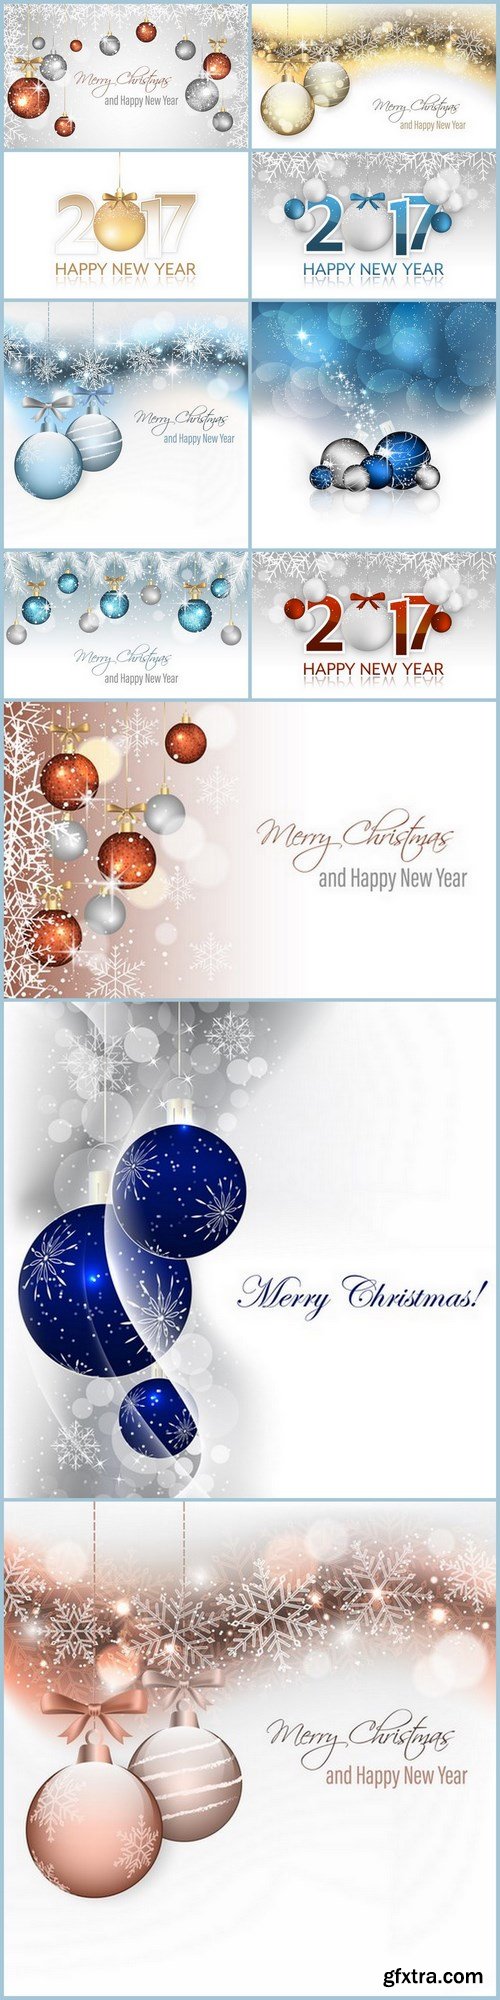 Christmas Greeting Card - 11 EPS Vector Stock